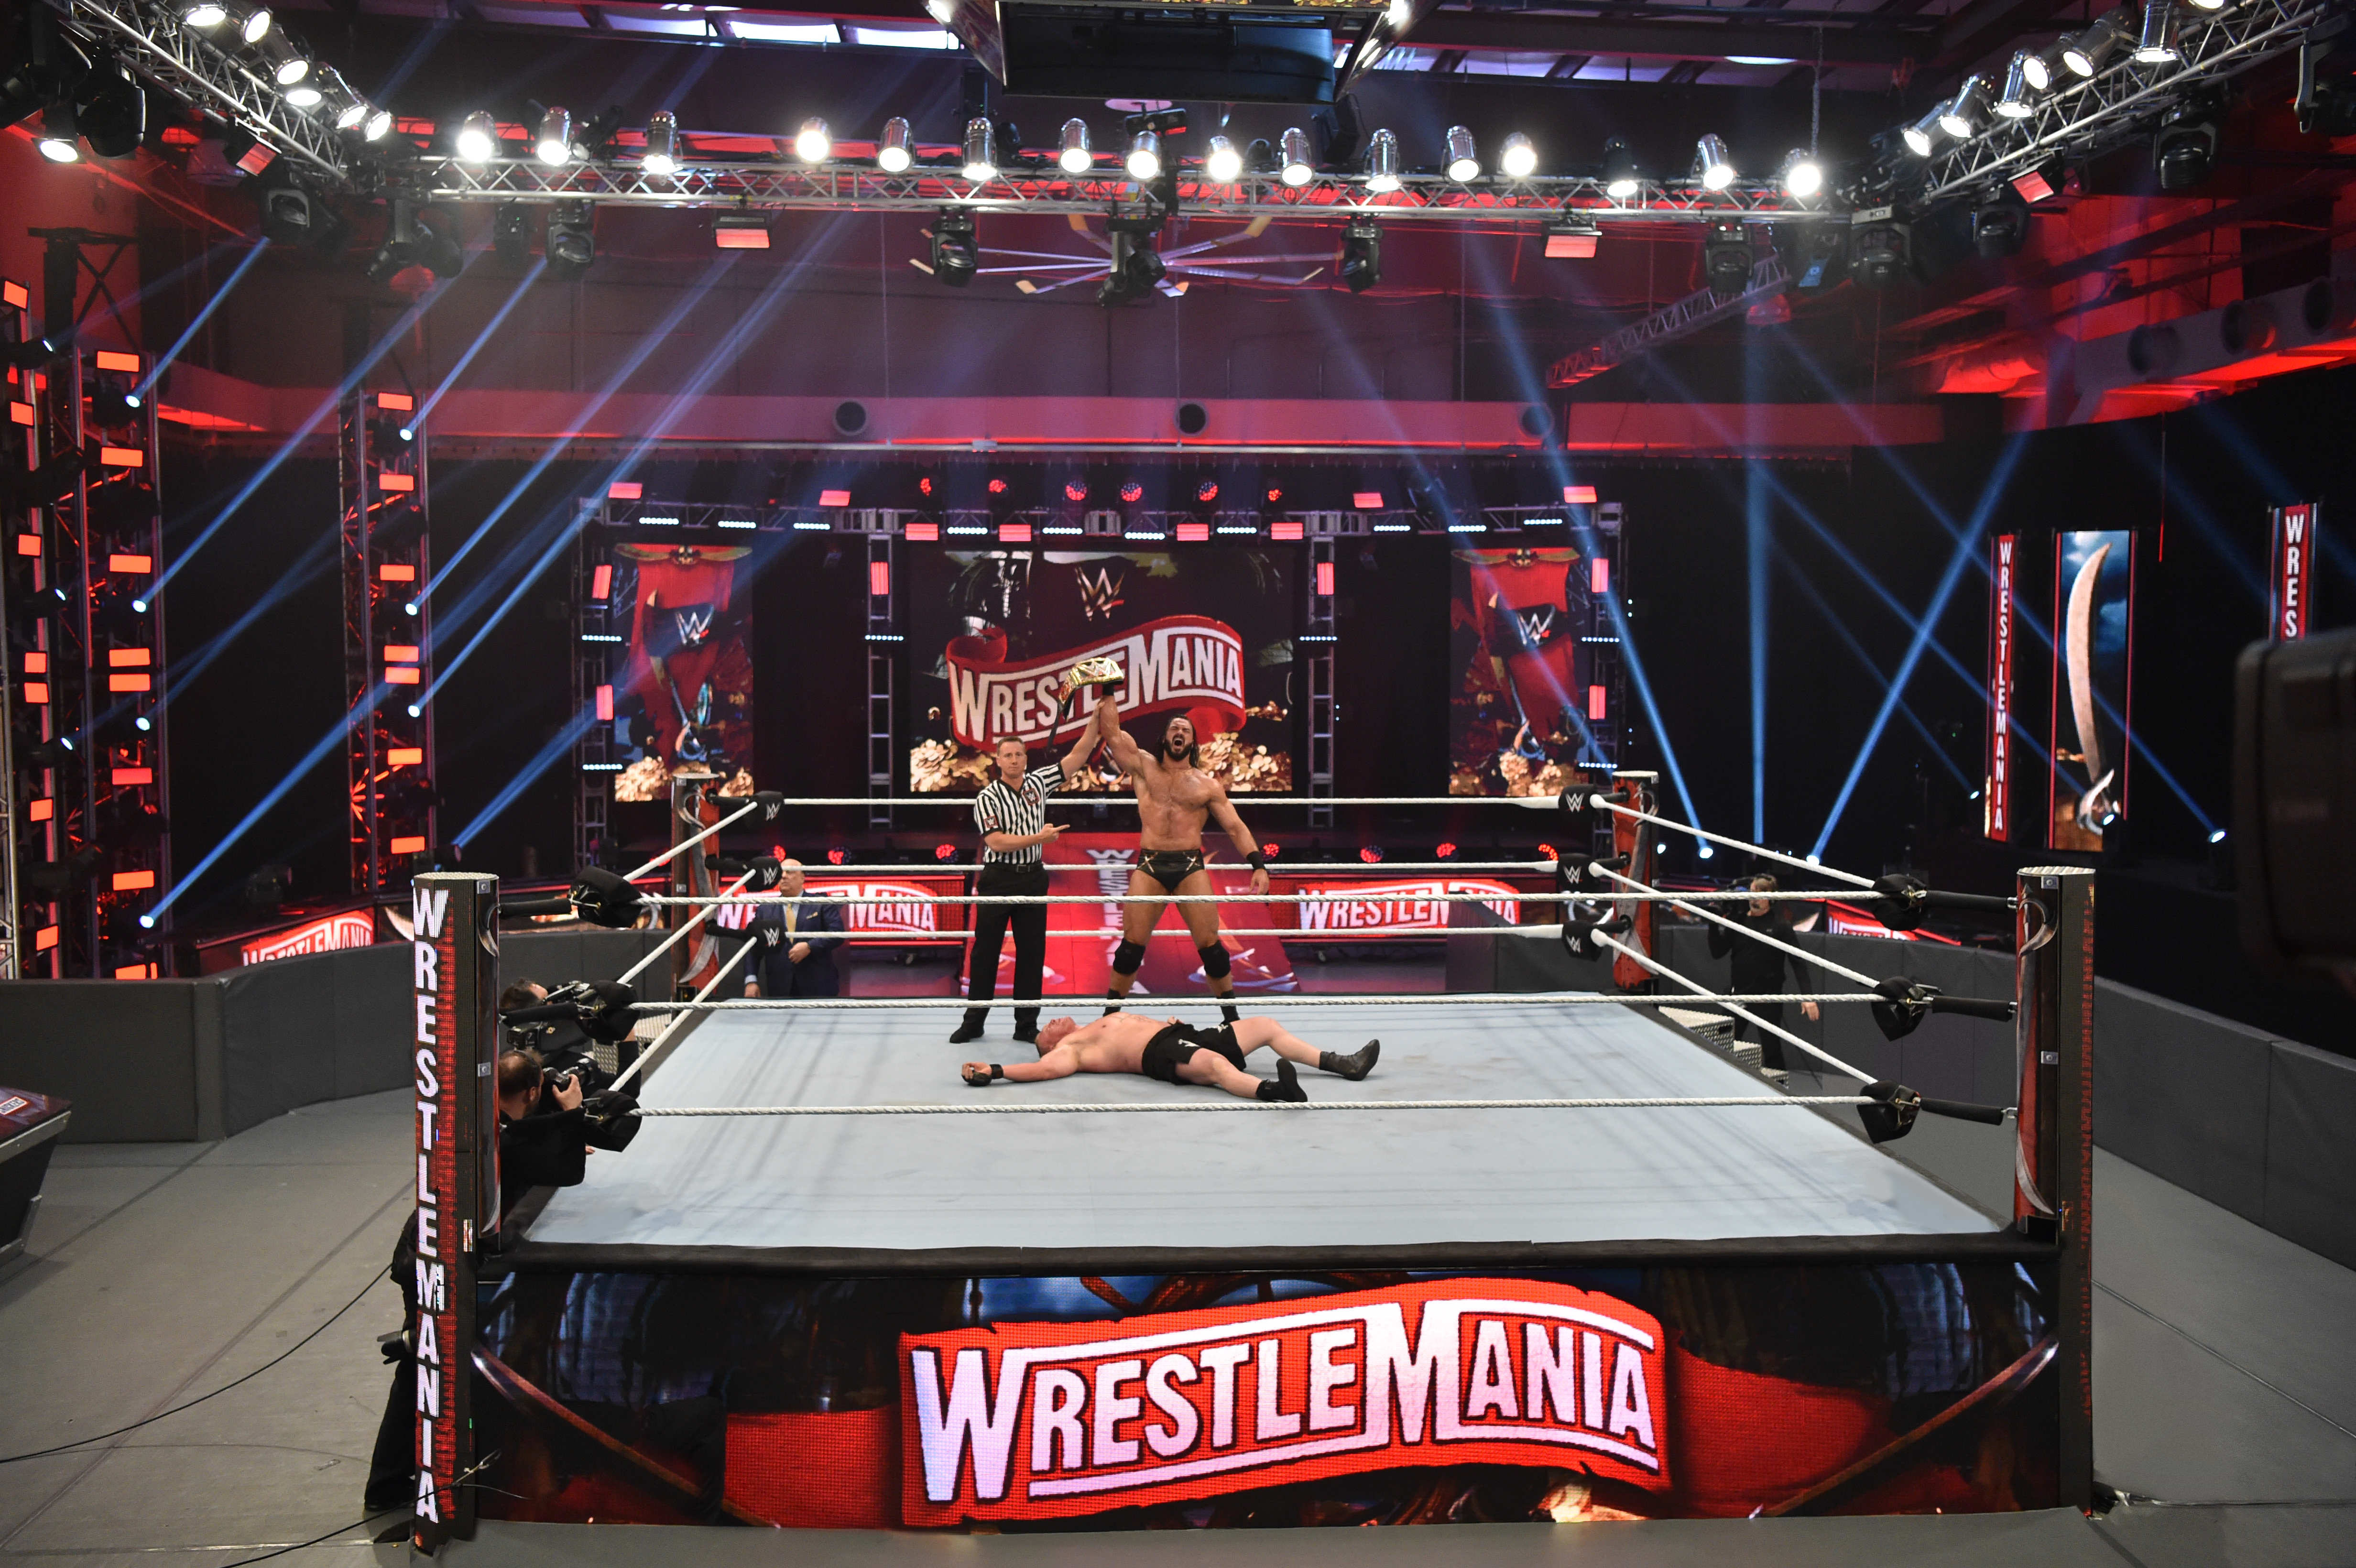 Drew McIntyre won the WWE Championship at Wrestlemania 36. 